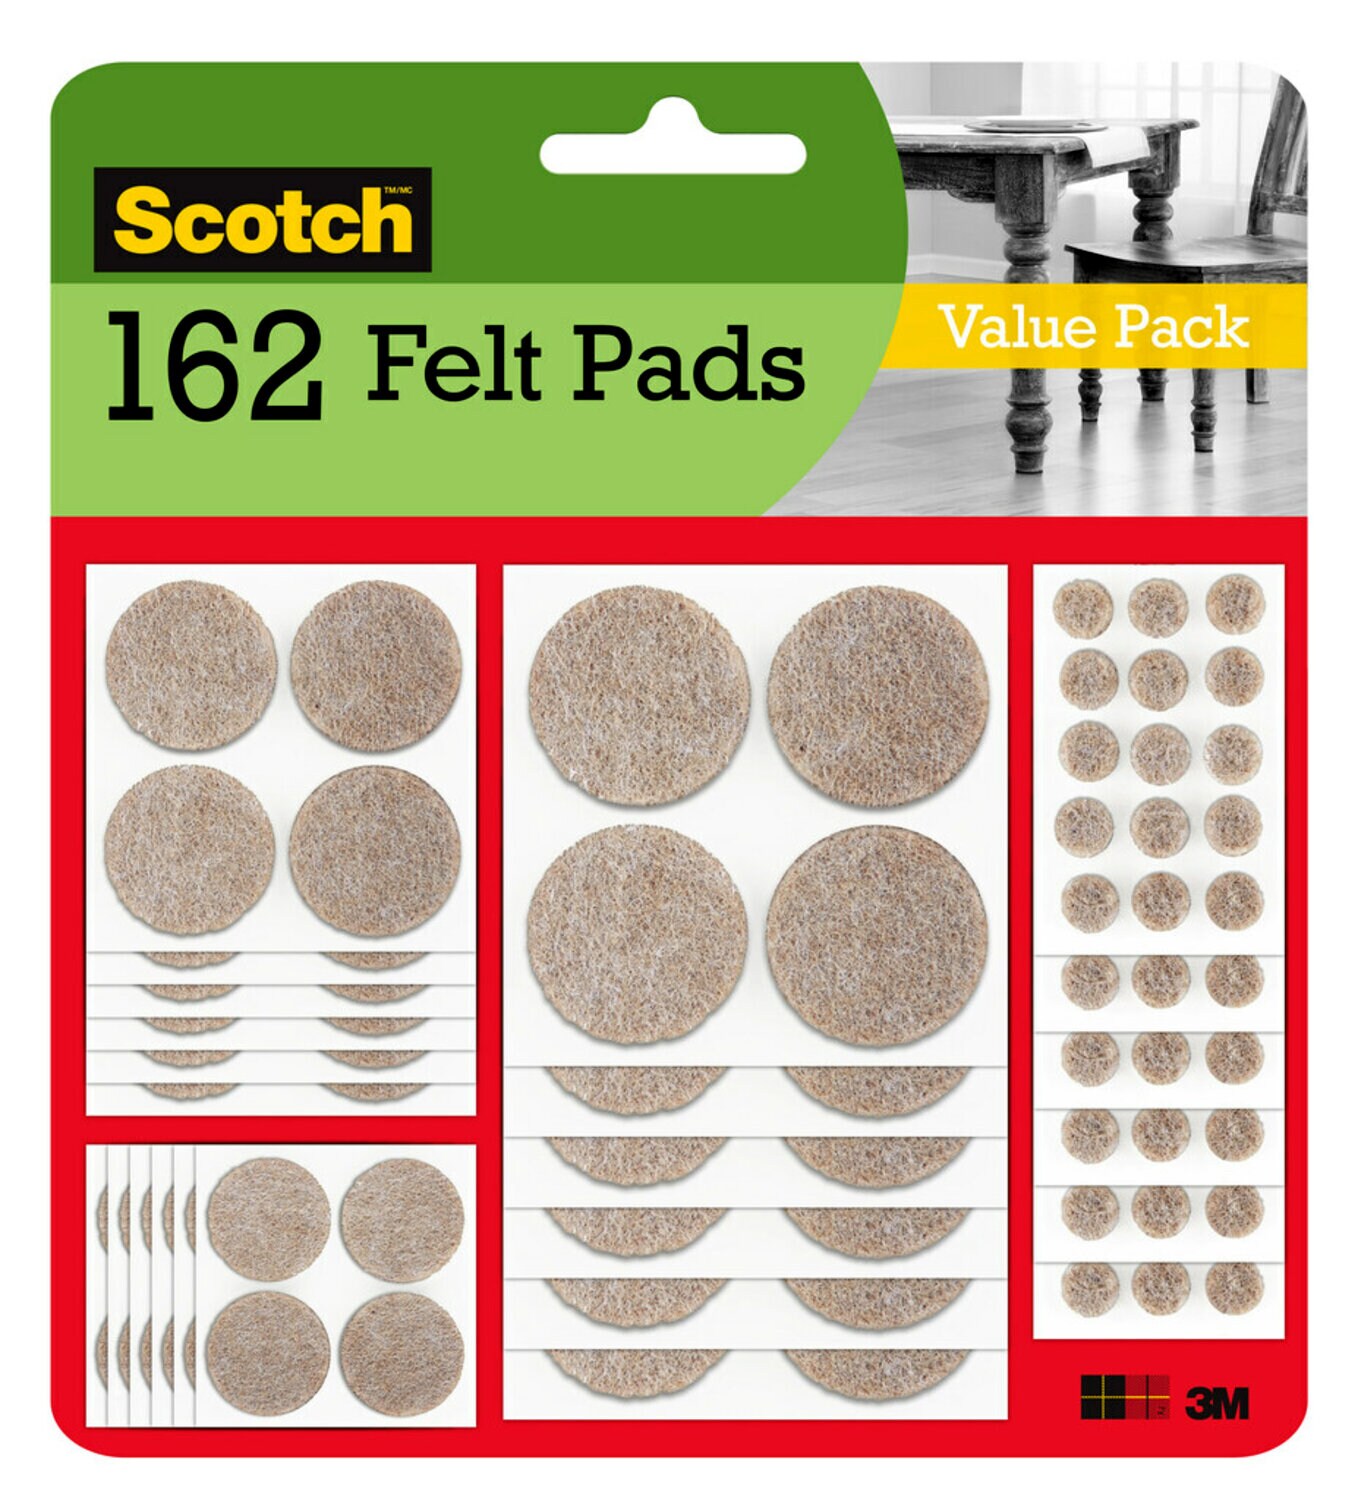 7100112868 - Scotch Felt Pads Value Pack, SP845-NA, Beige, 162 Pack